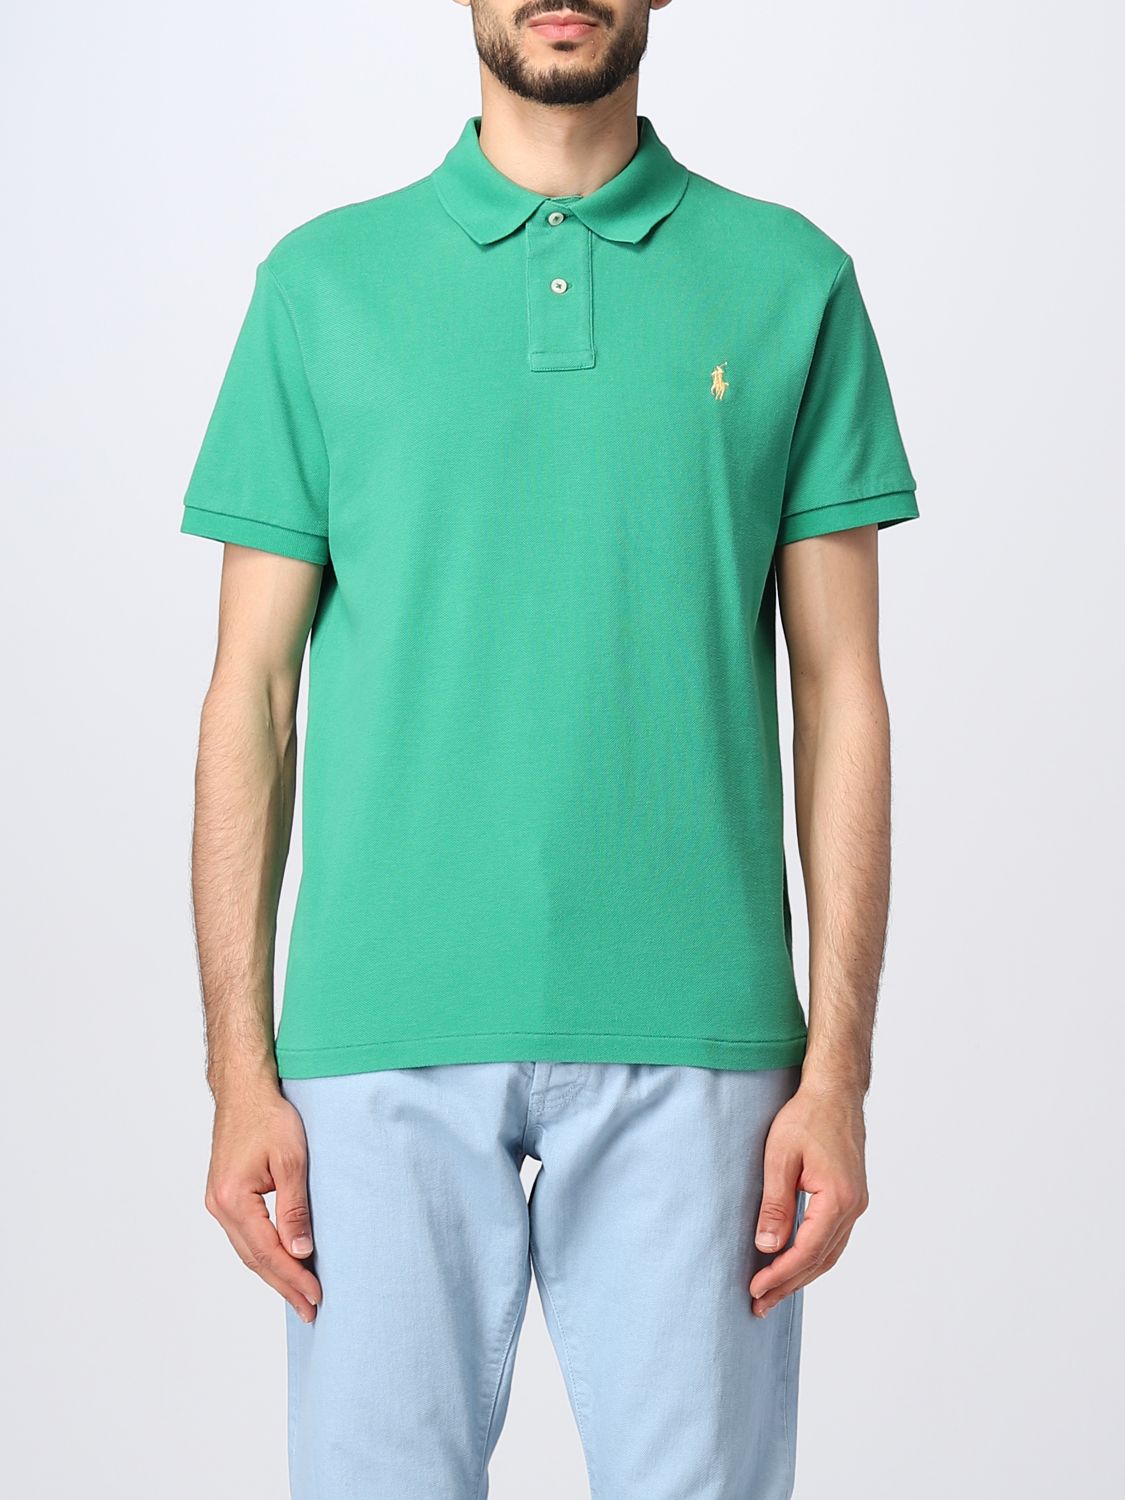 POLO RALPH LAUREN: polo shirt for man - Apple Green | Polo Ralph Lauren ...